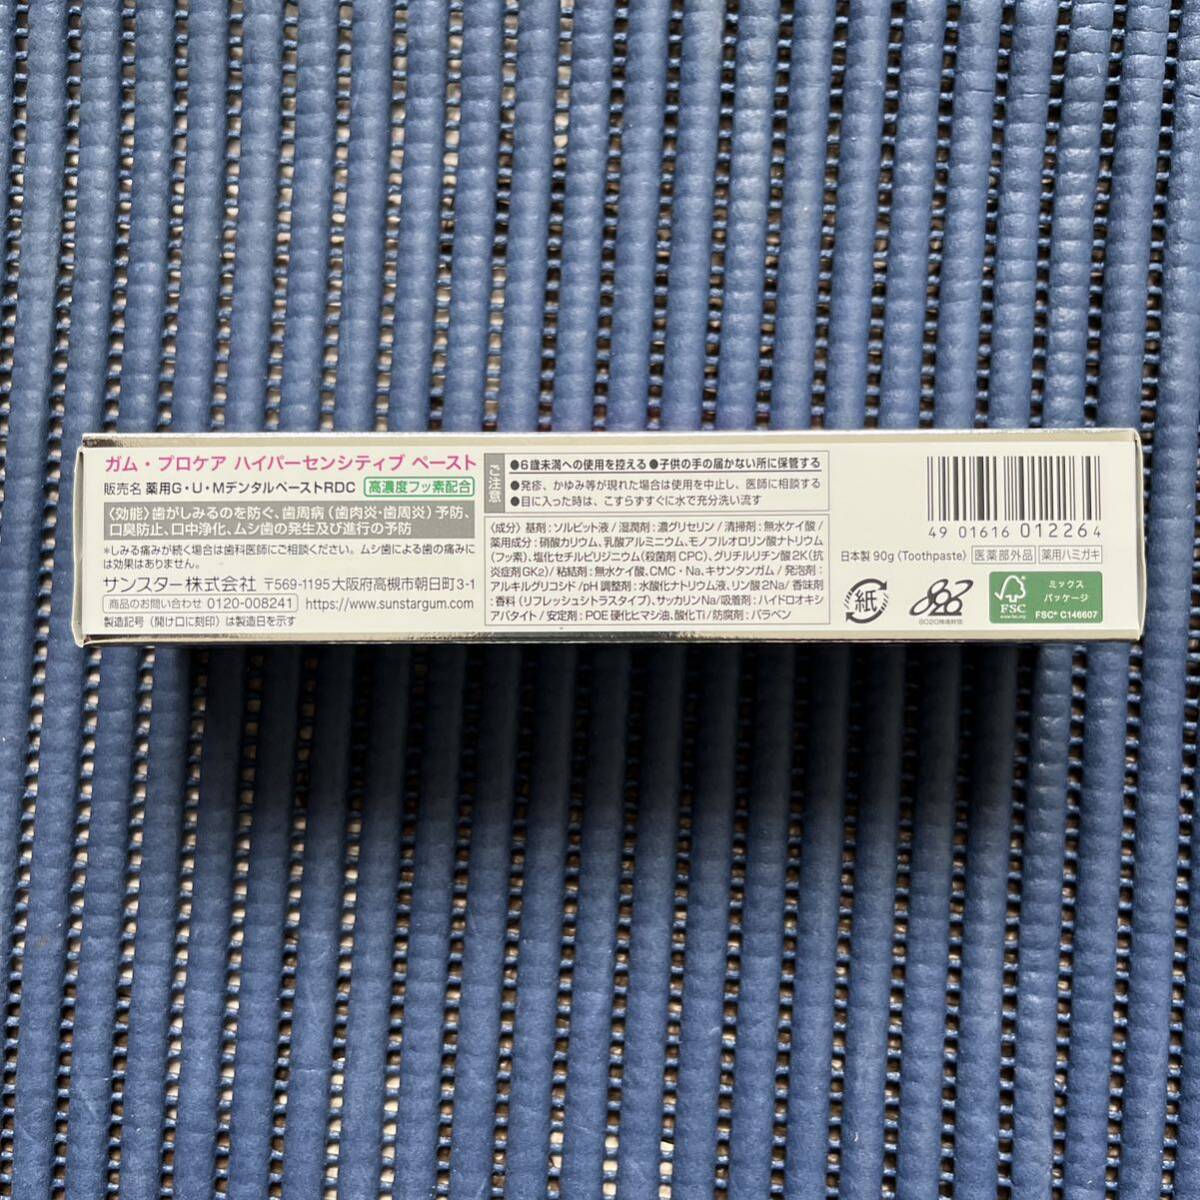  Sunstar chewing gum Pro care hyper sen City b paste 90g ×5 piece set 